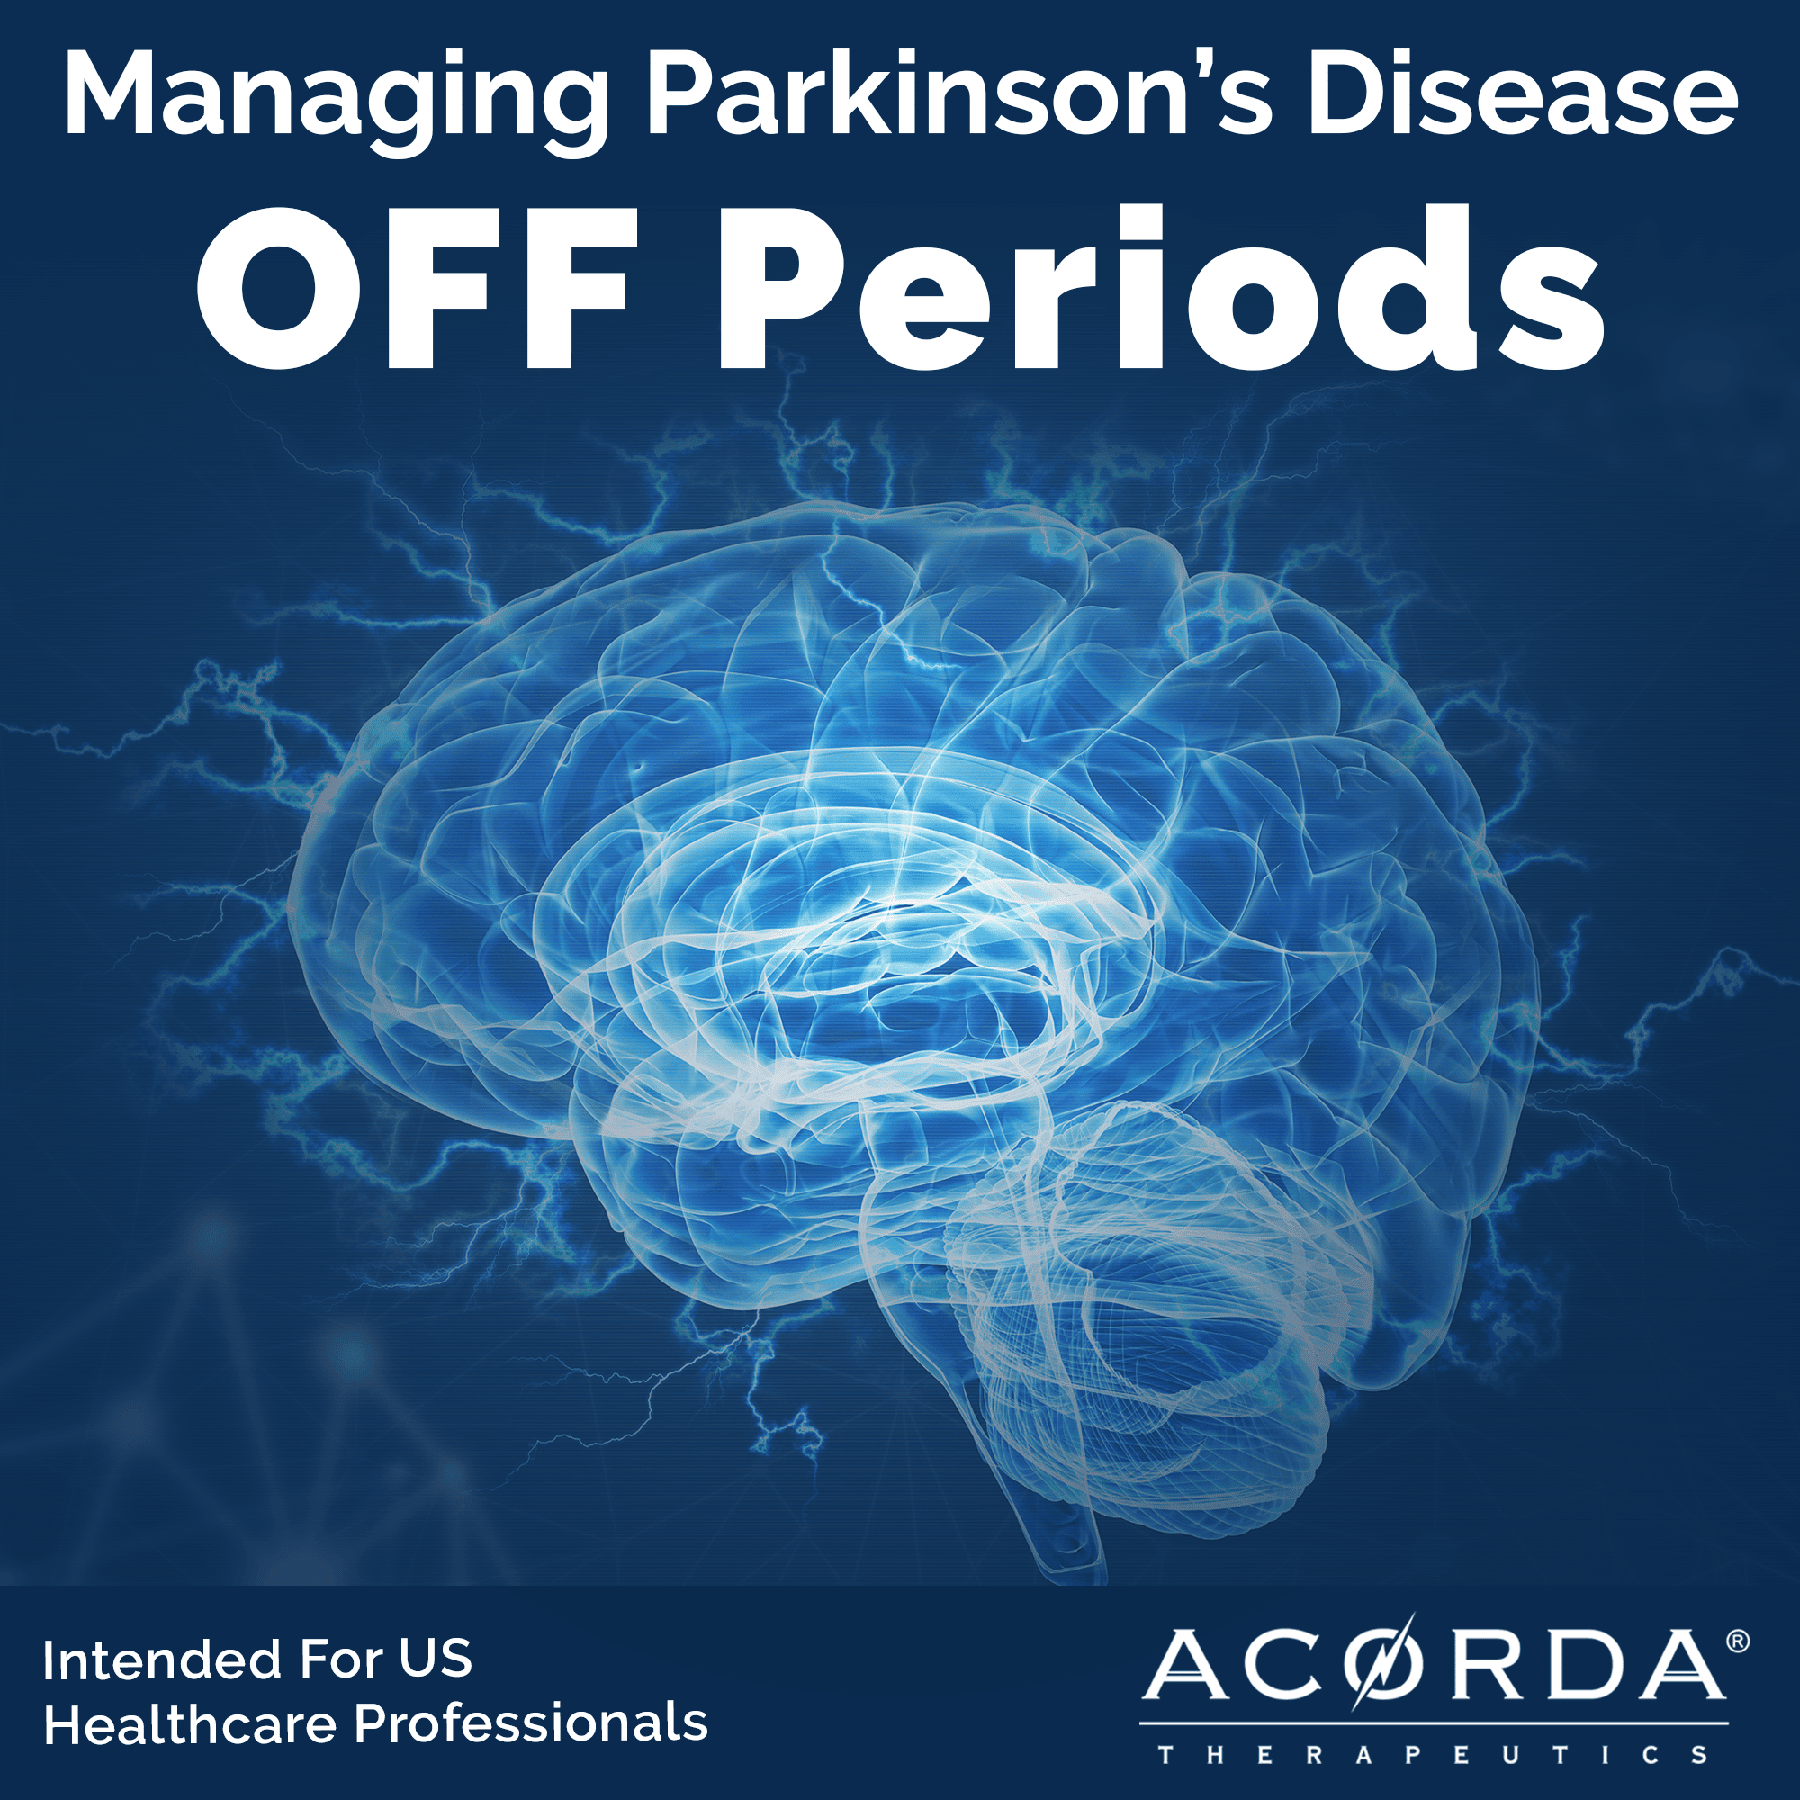 Managing Parkinsons Disease OFF Periods